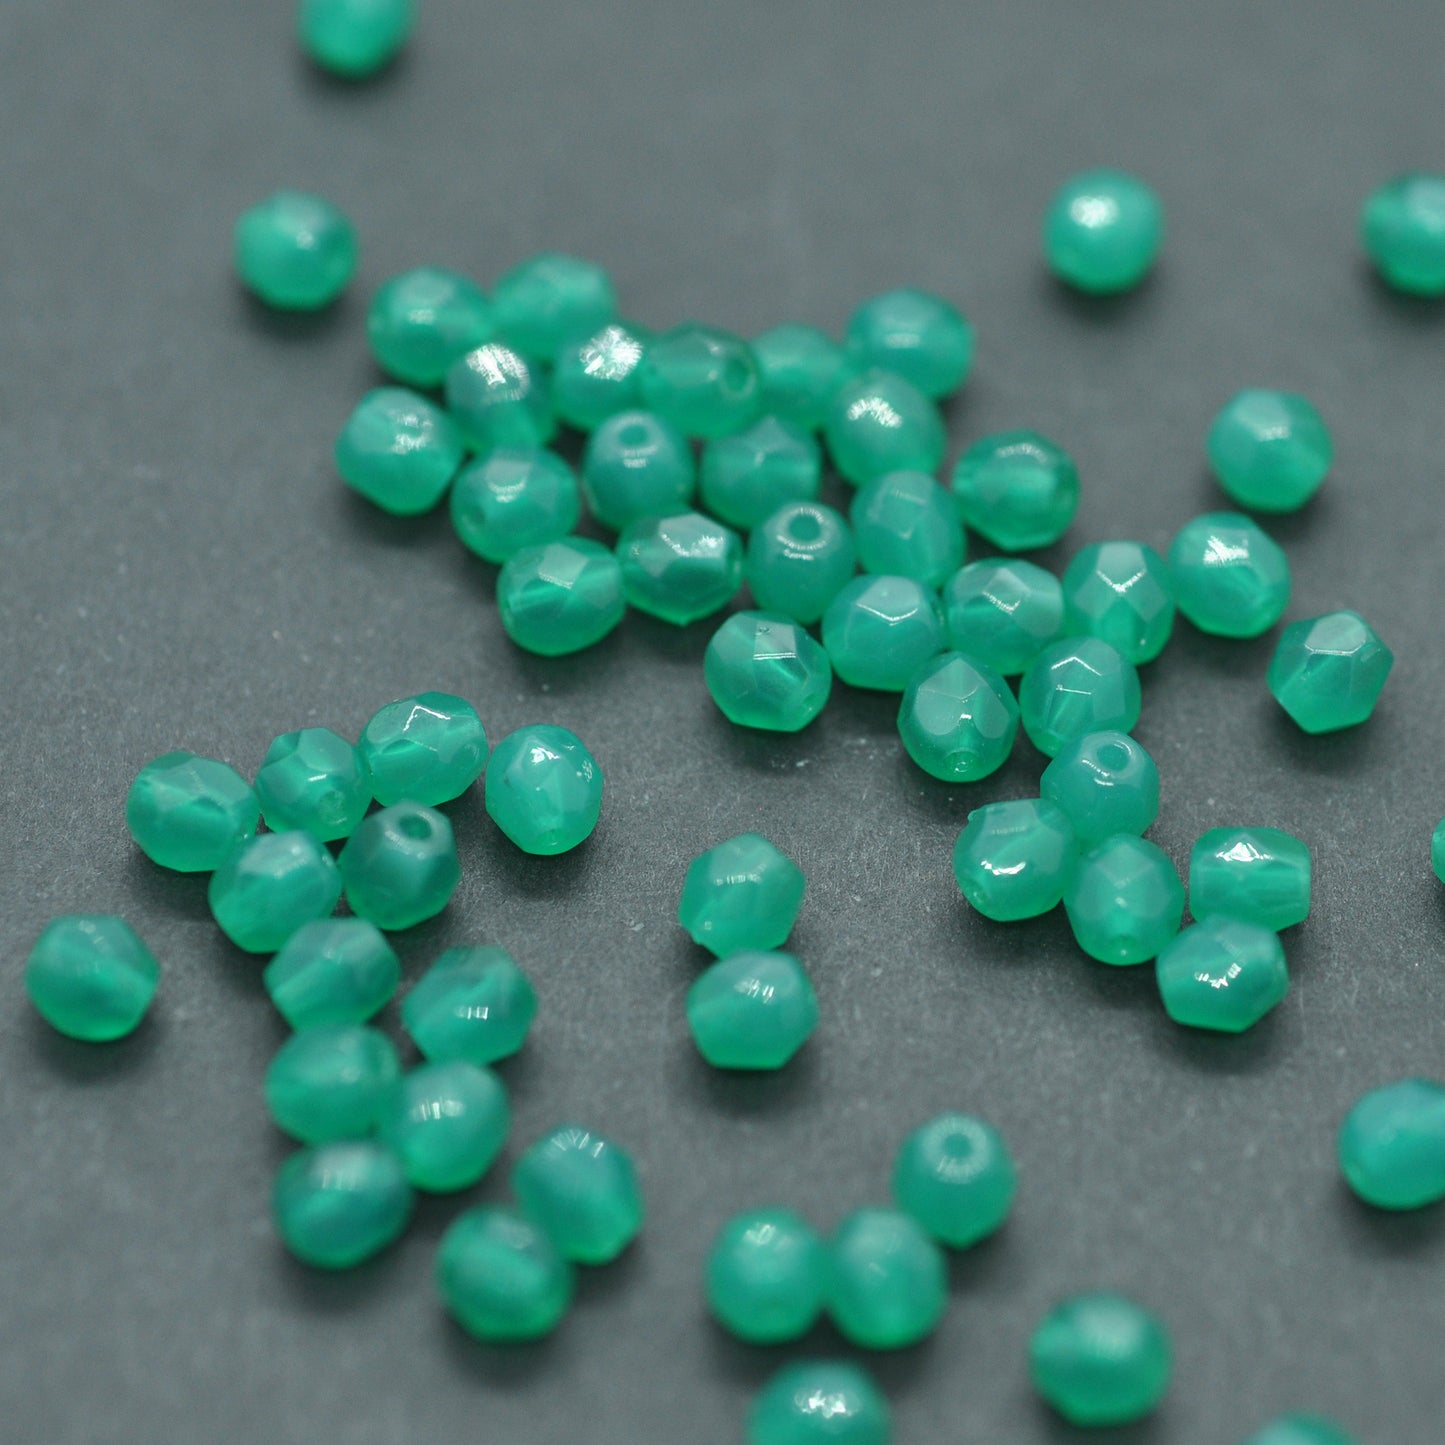 Preciosa ground glass beads / malachite / 100 pcs. / 4mm